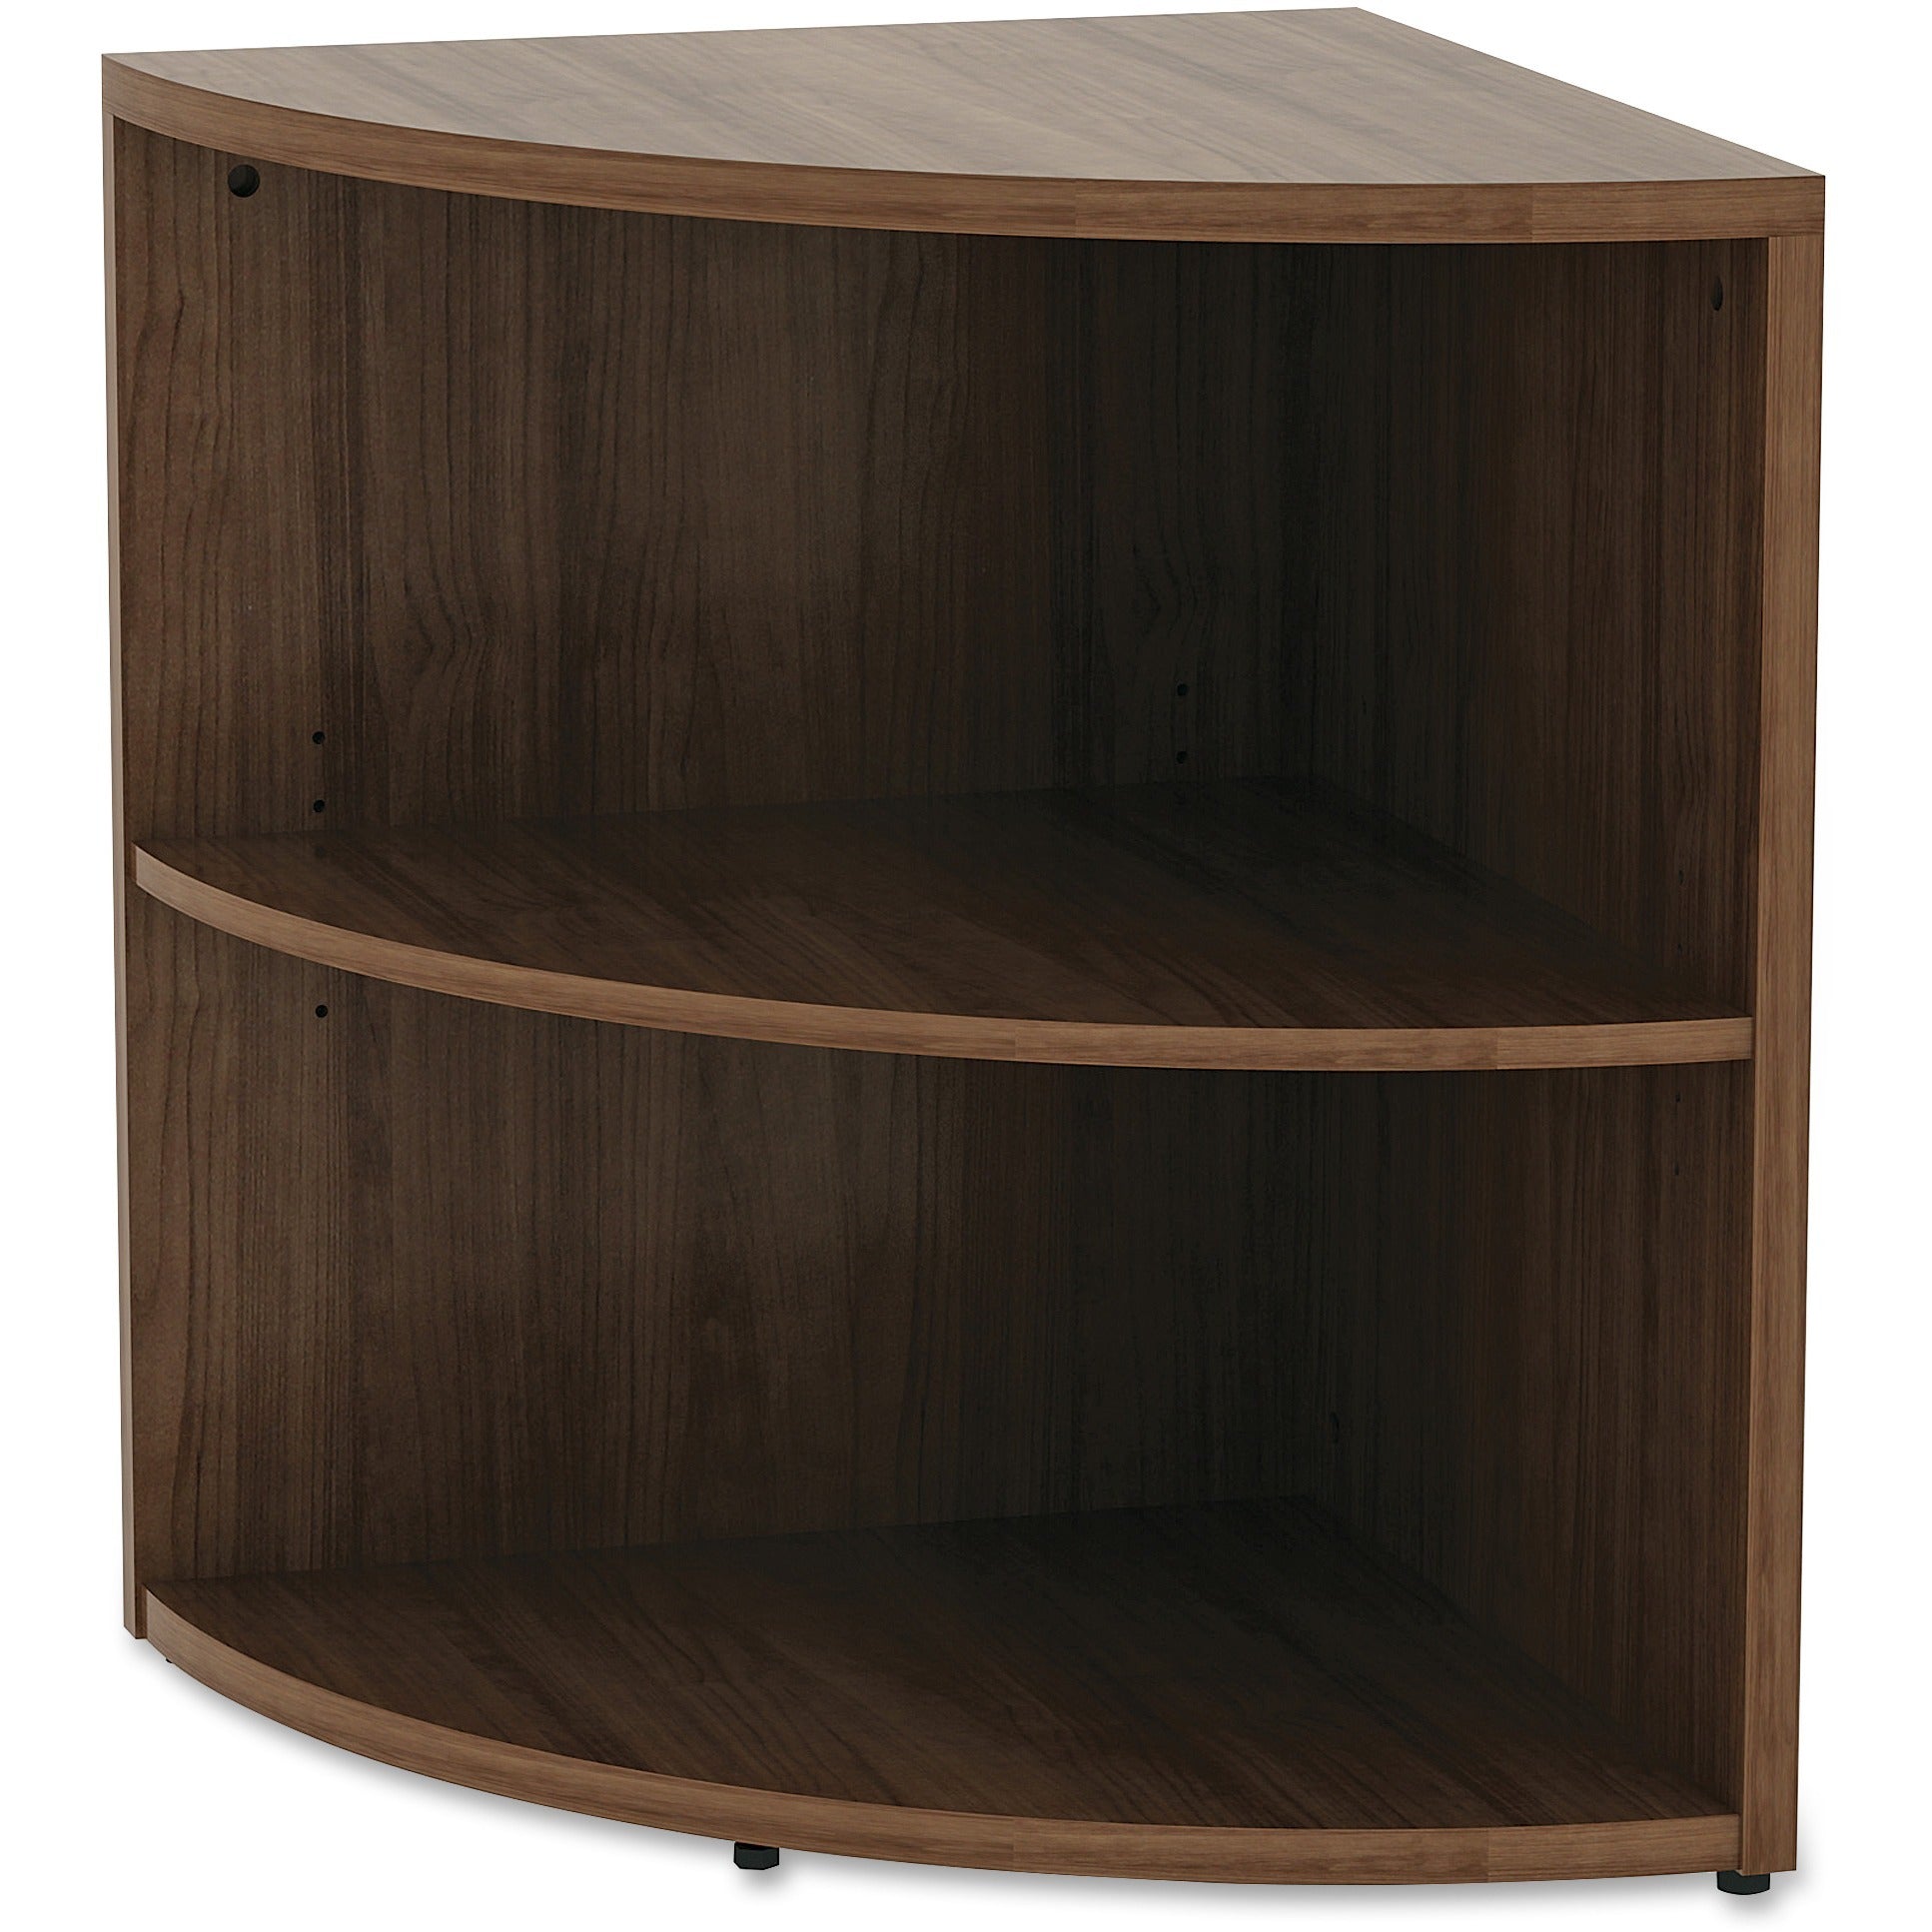 Lorell Essentials Series Desk End Corner Bookcase - 23.6" Height x 29.5" Width30.7" Length%Floor - Walnut - Laminate, Polyvinyl Chloride (PVC) - 1 Each - 3